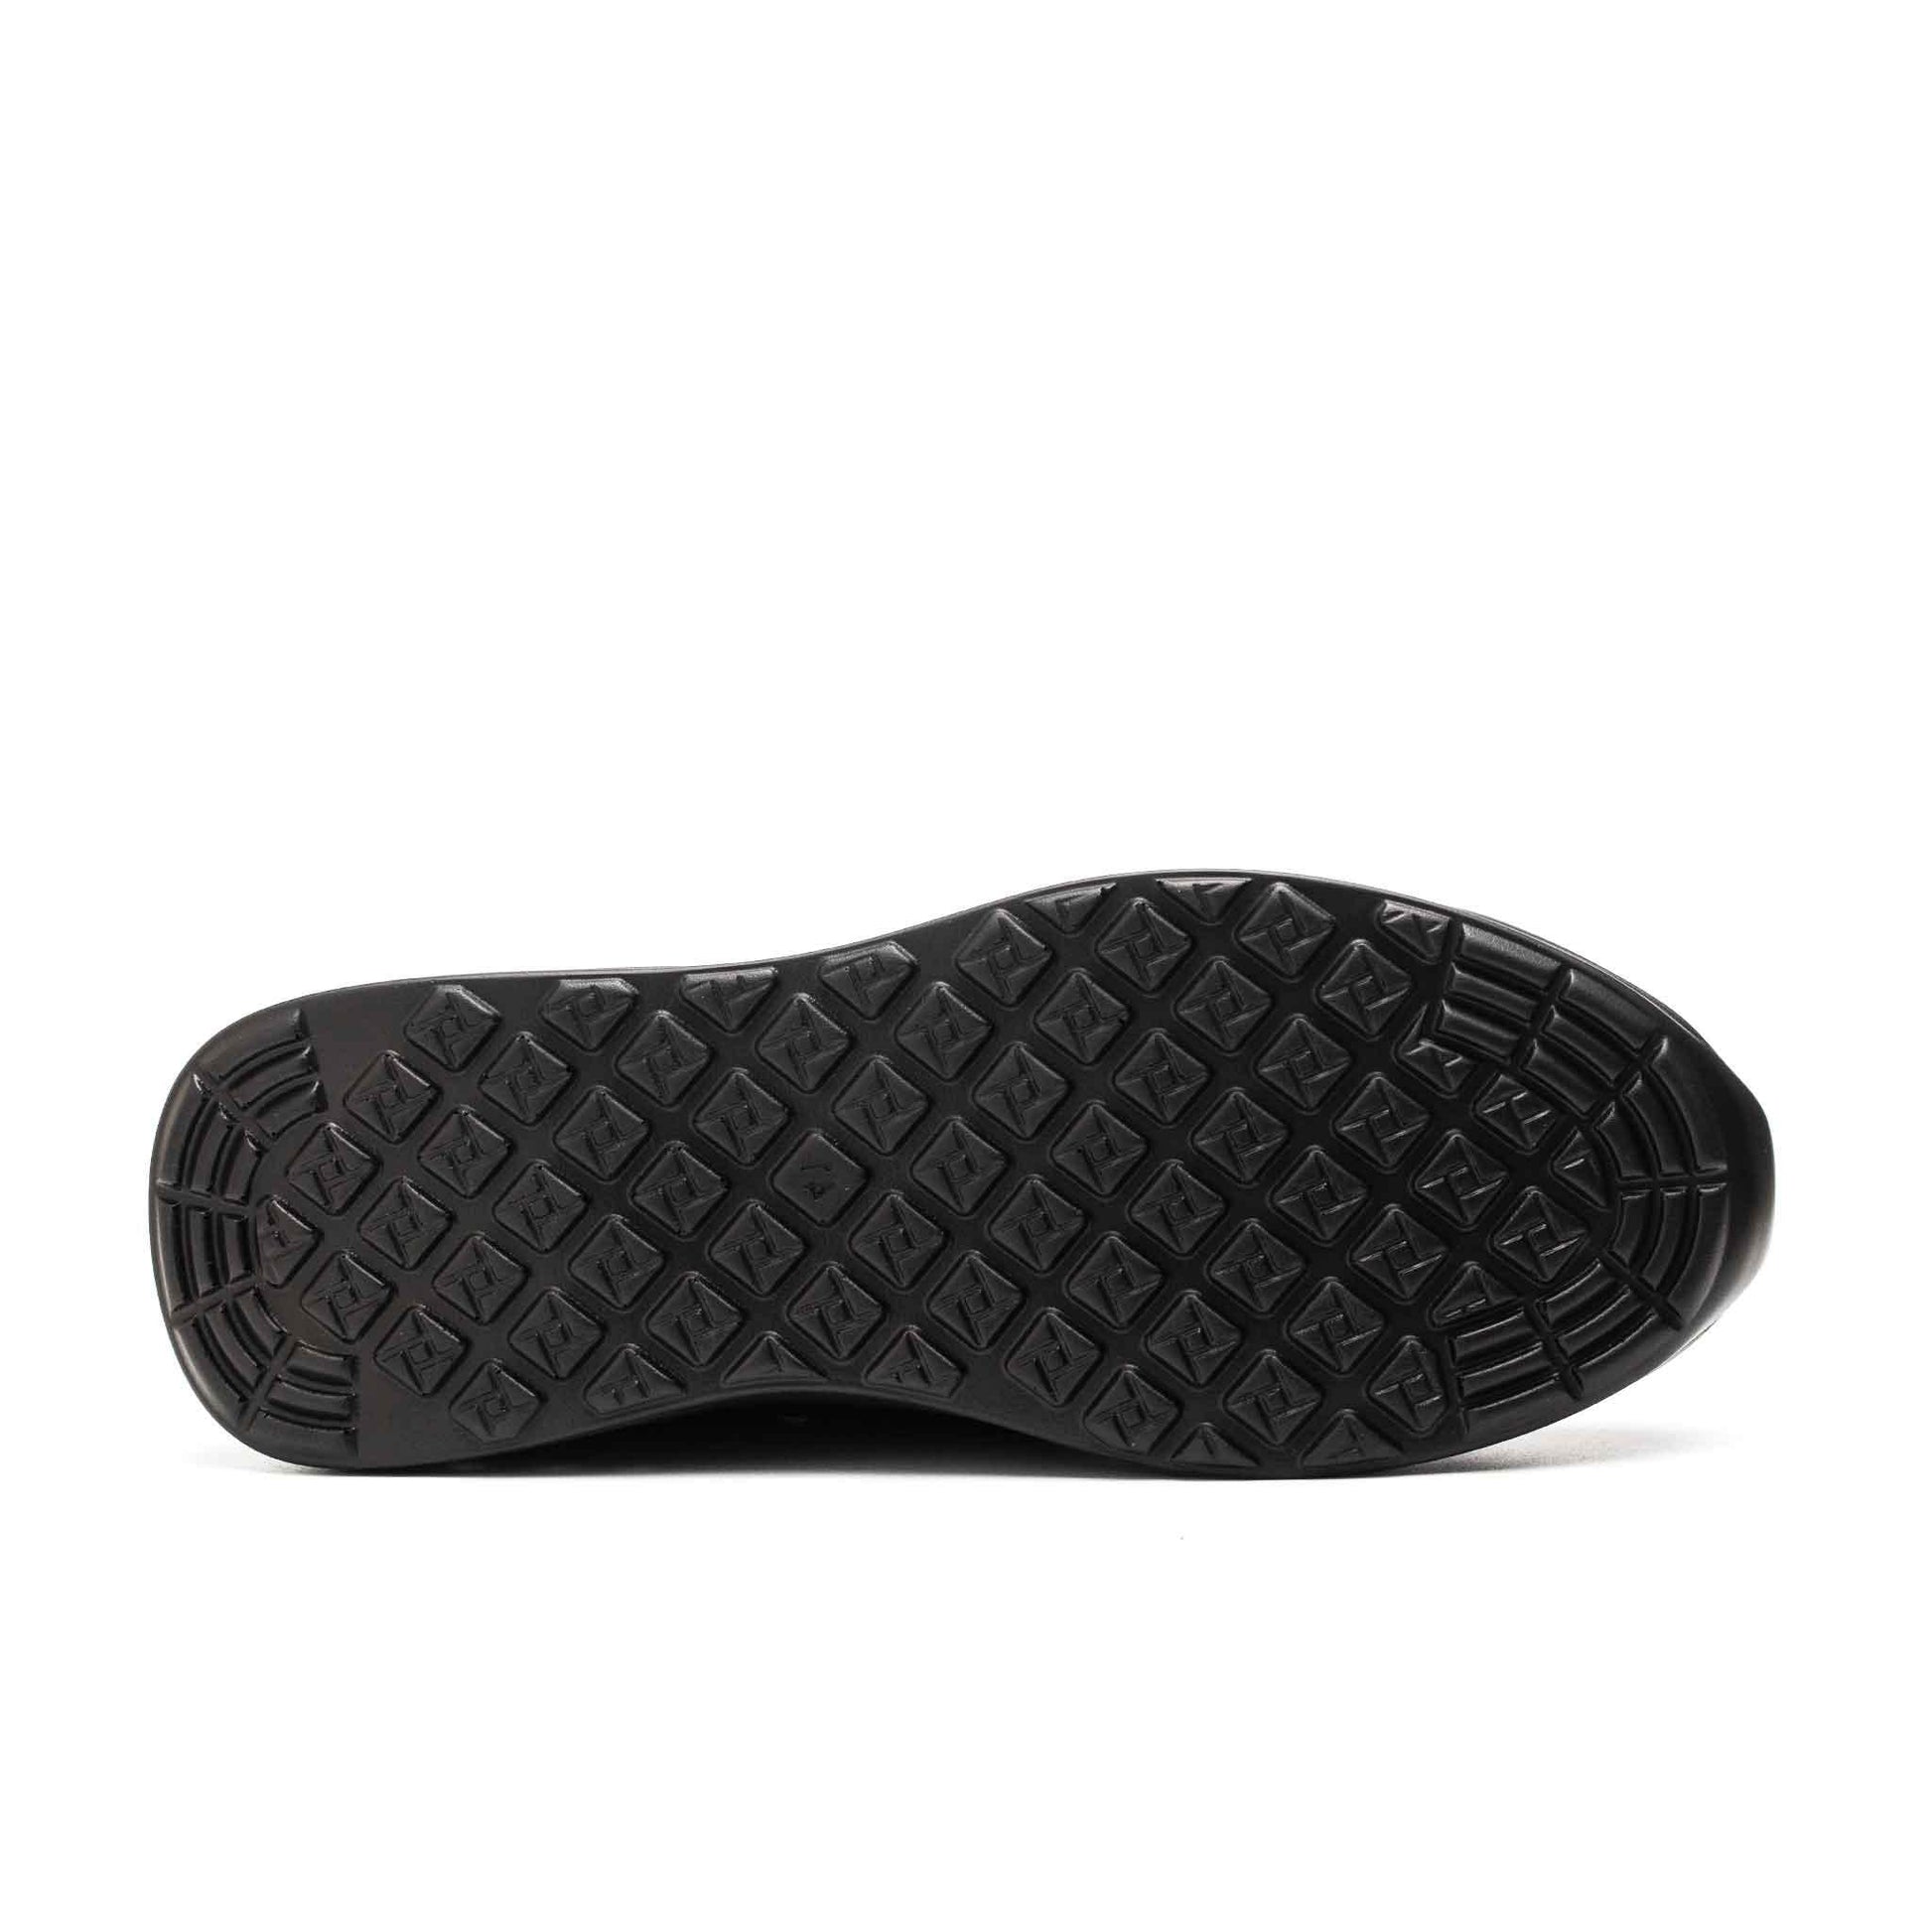 Men's Steel Toe Sneakers - Air Cushion | B150 - USINE PRO Footwear